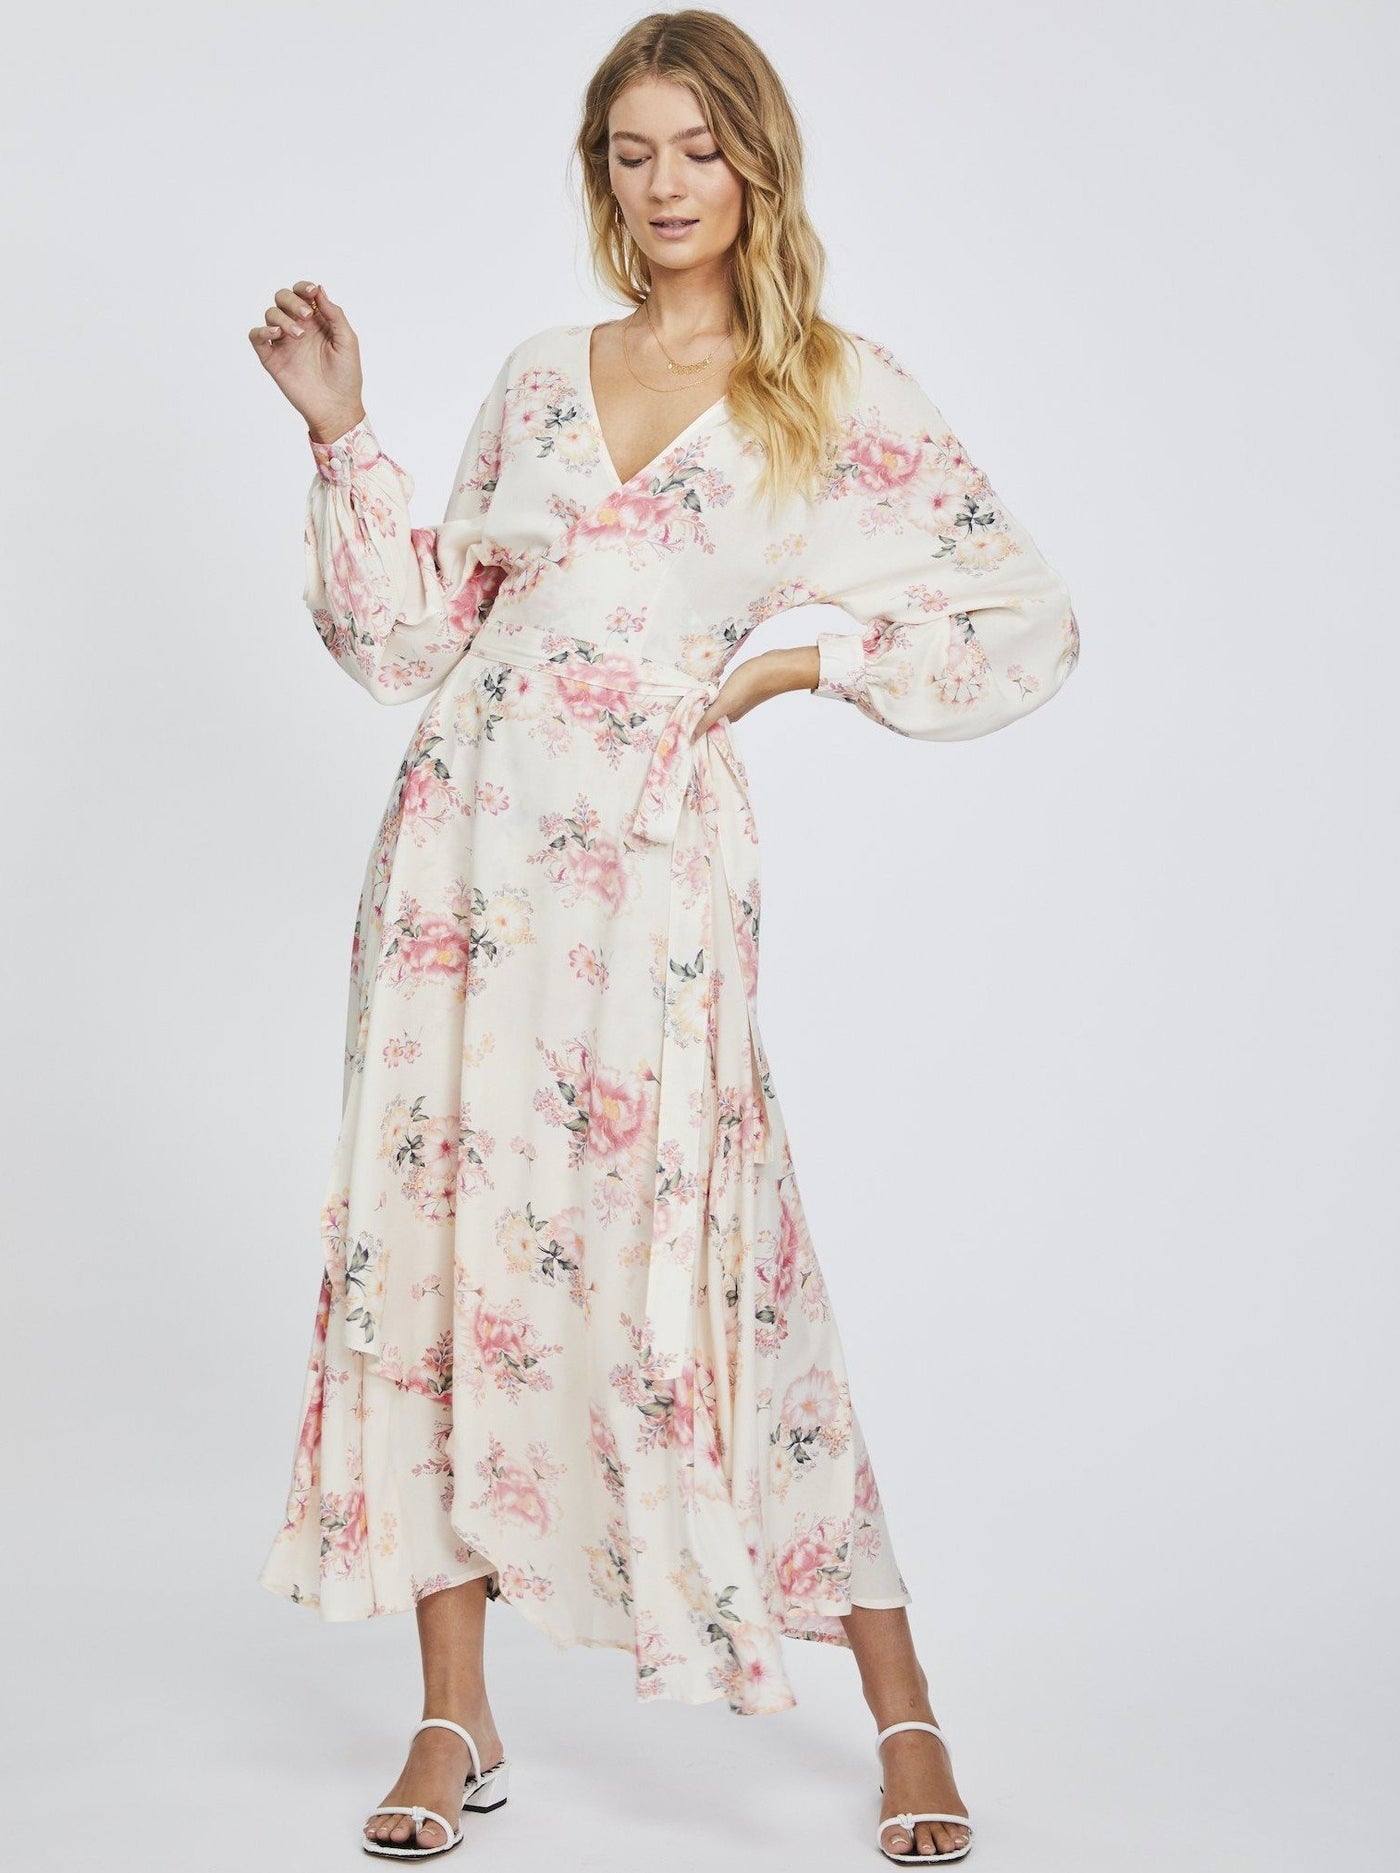 Womens boho blush pink floral long sleeve wrap maxi dress studio front image